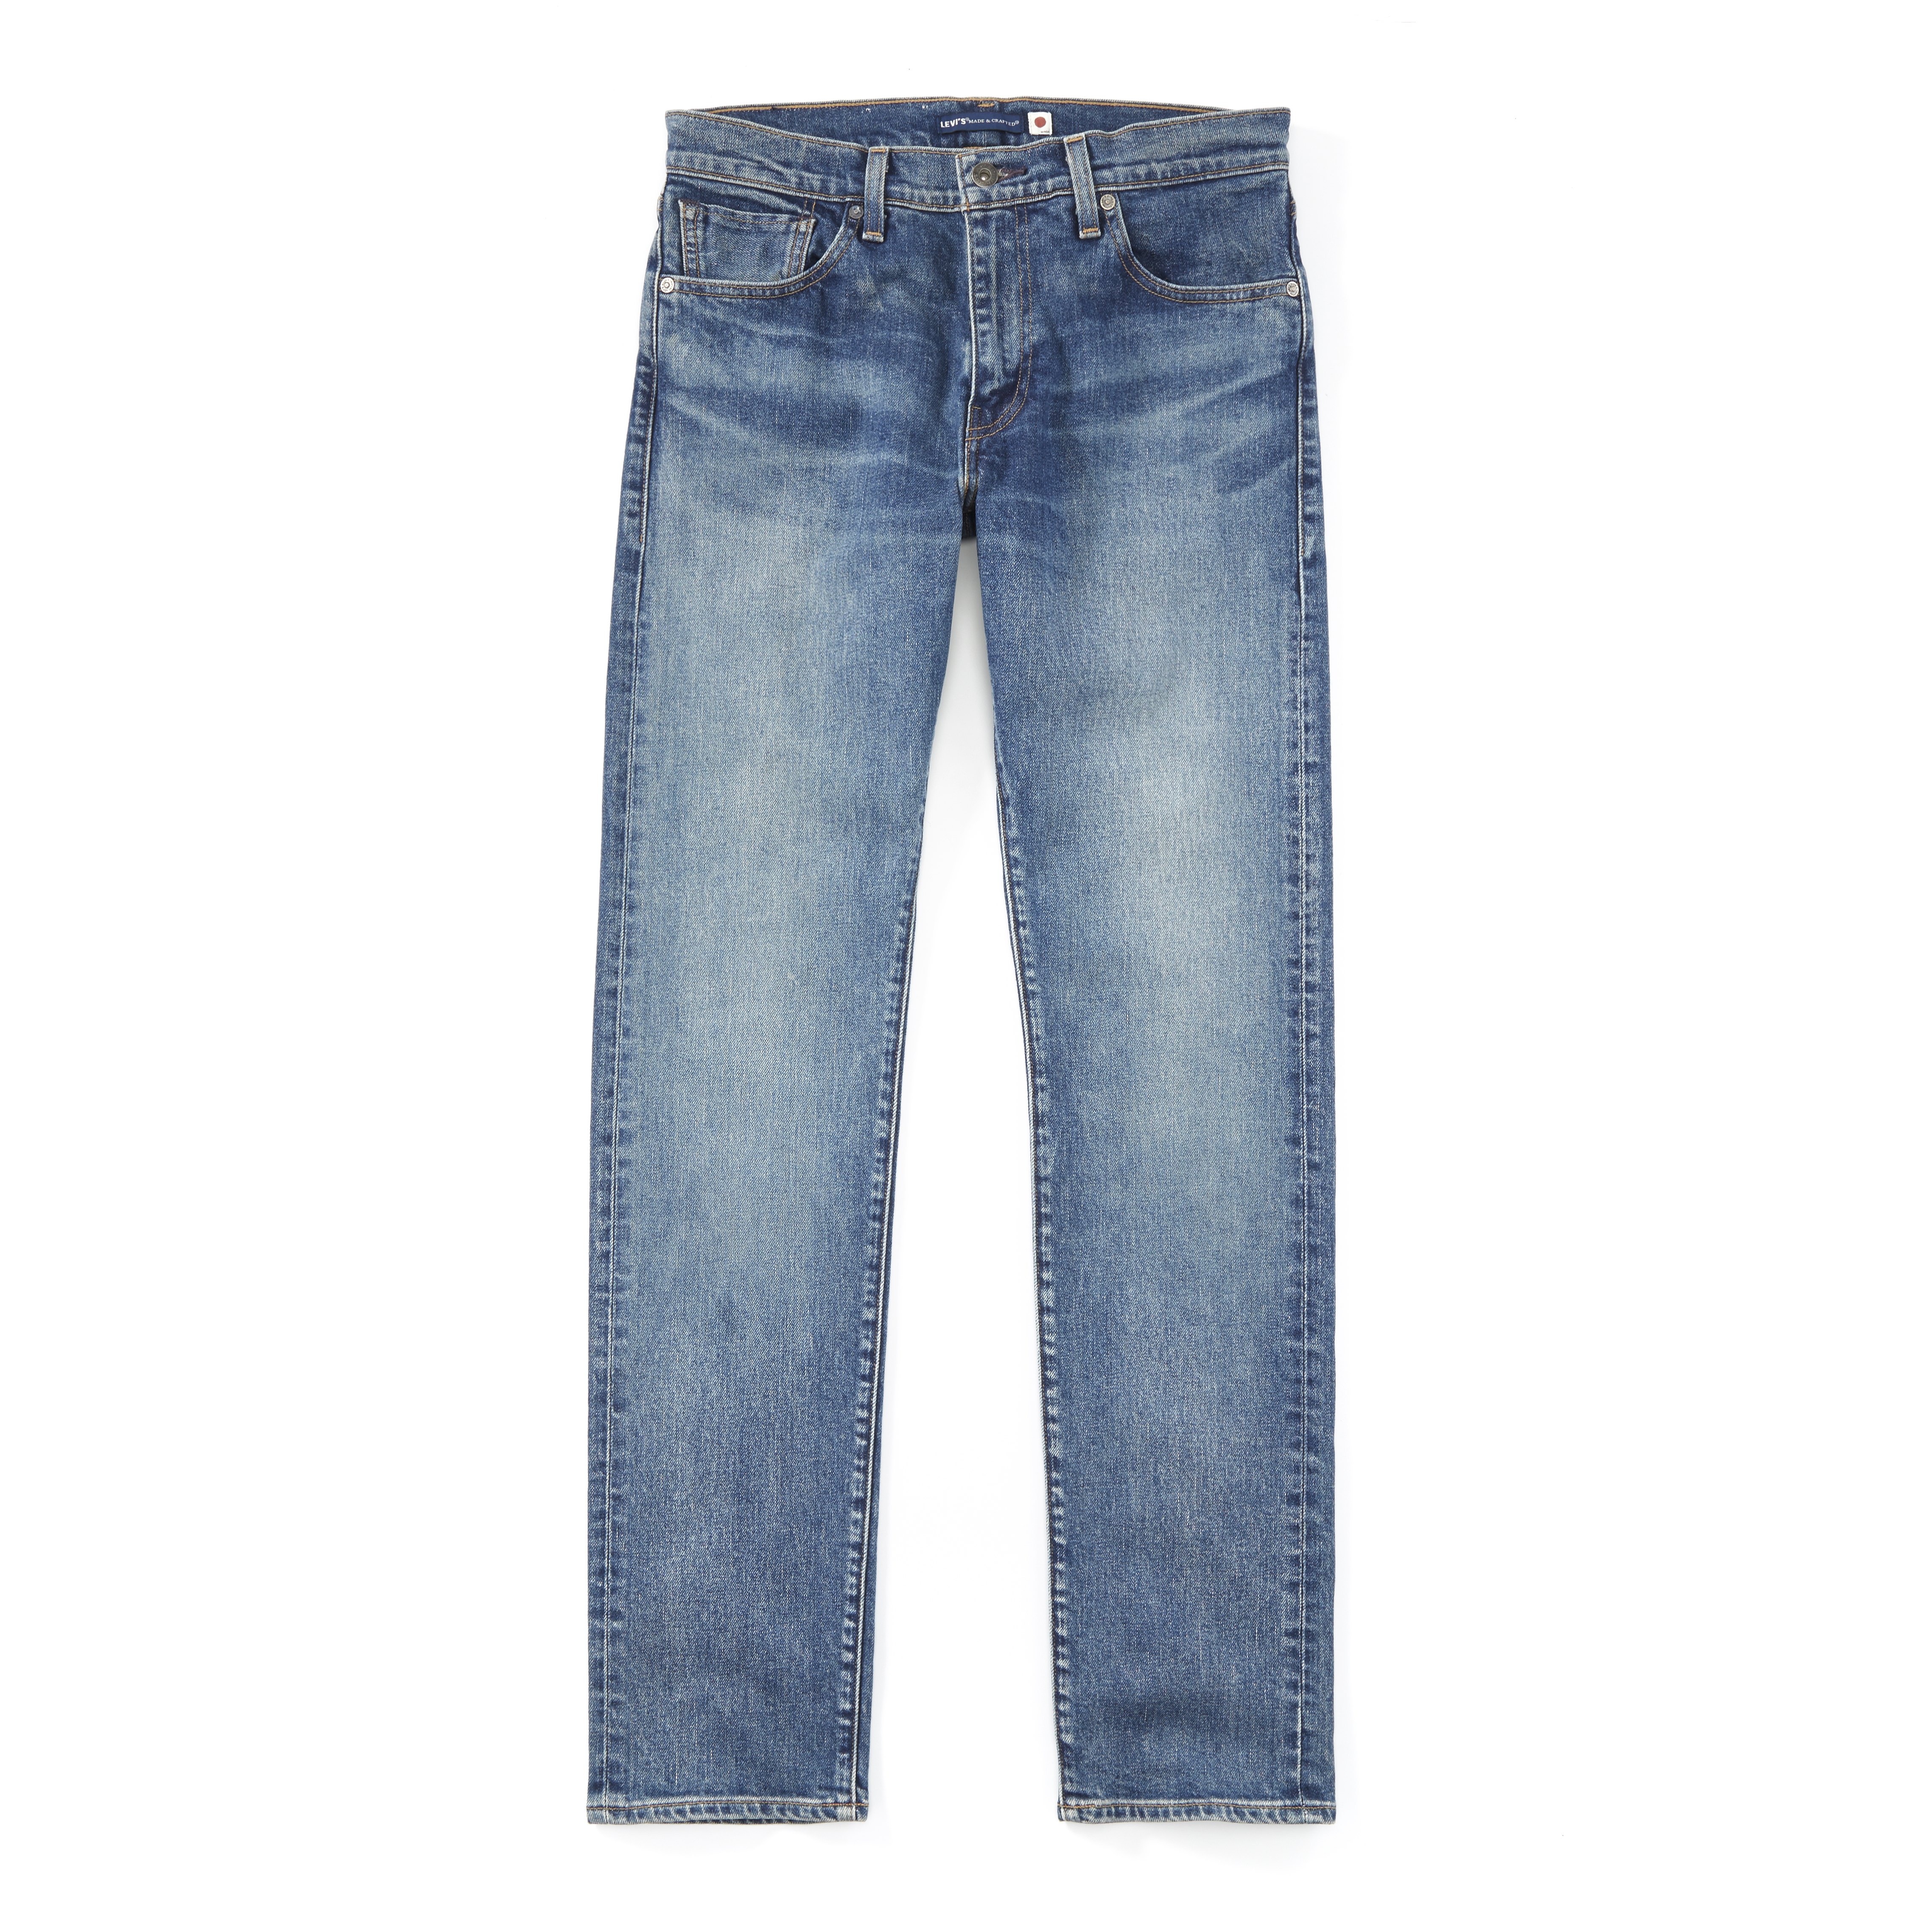 levi's 511 selvedge jeans